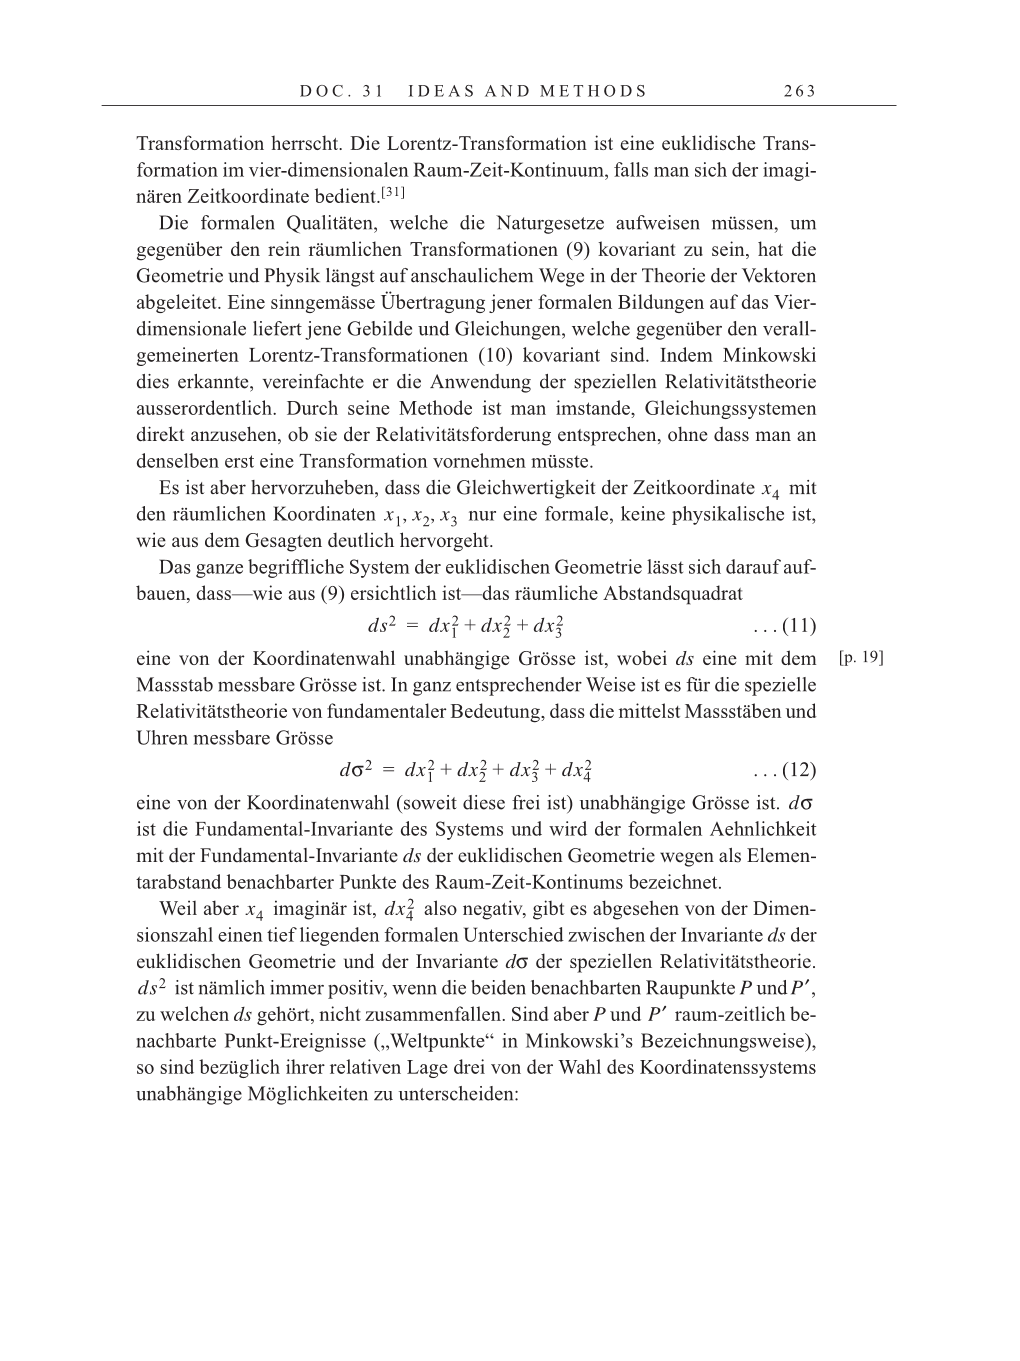 Volume 7: The Berlin Years: Writings, 1918-1921 page 263